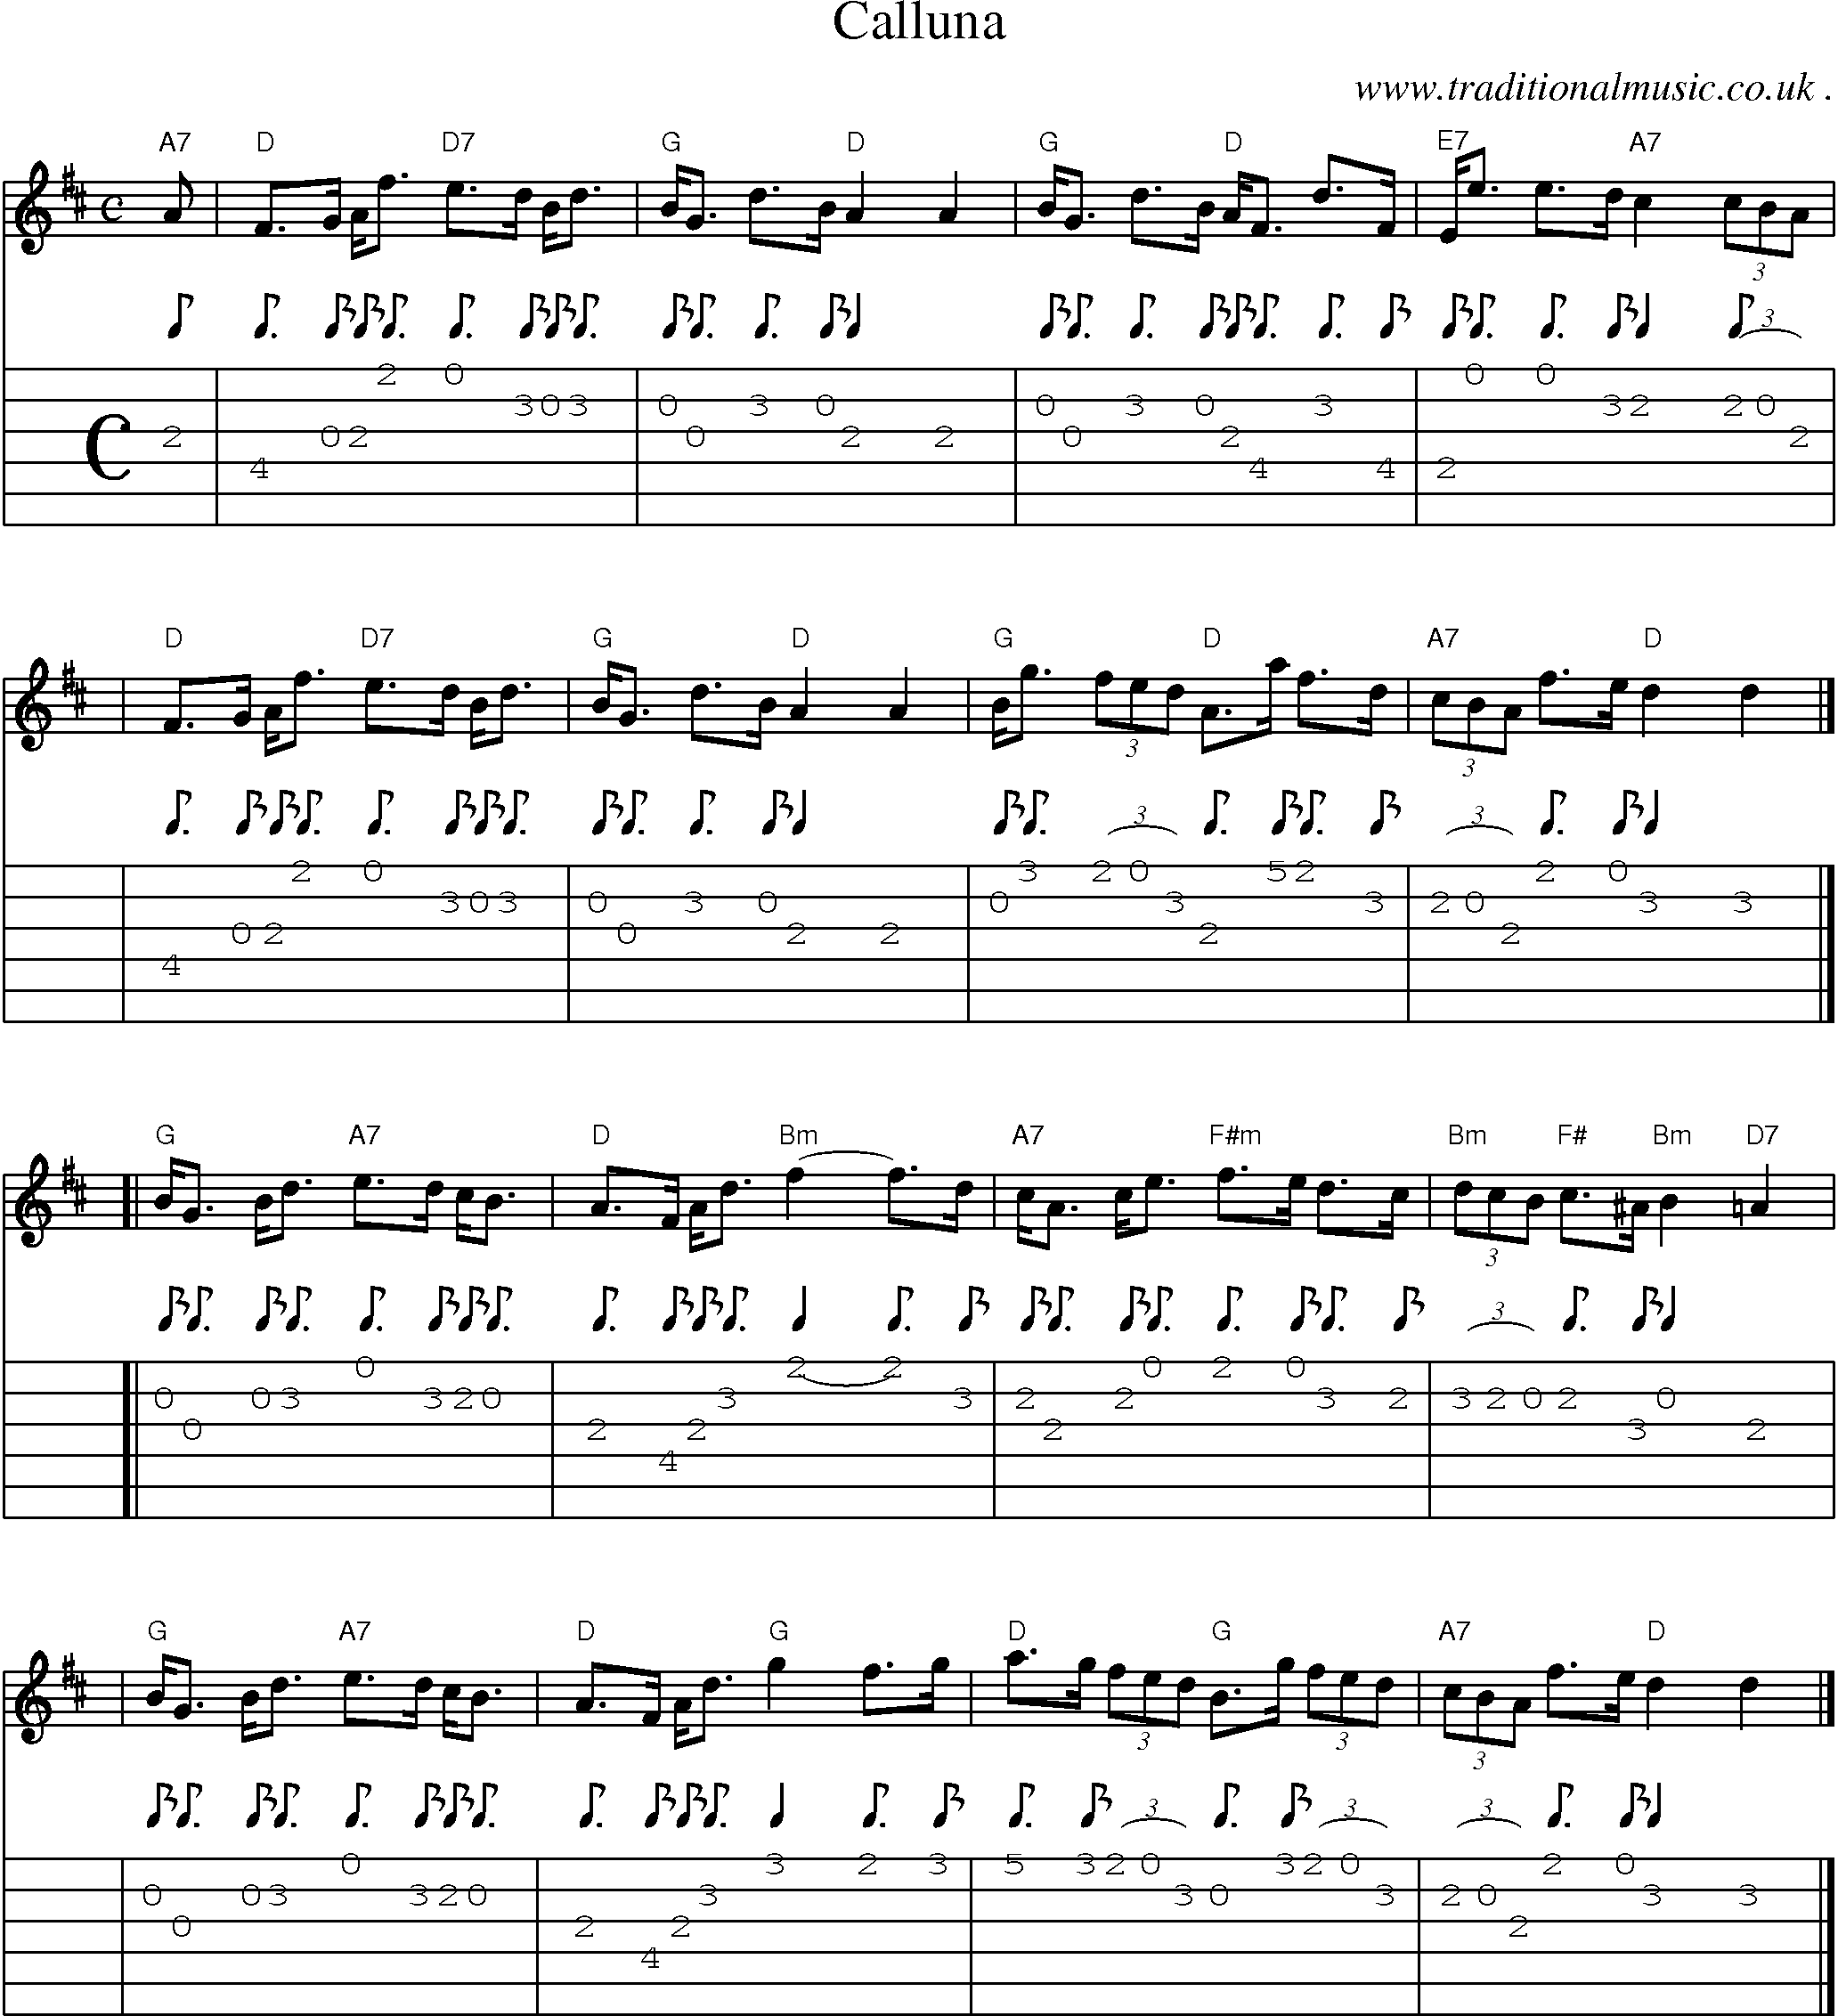 Sheet-music  score, Chords and Guitar Tabs for Calluna